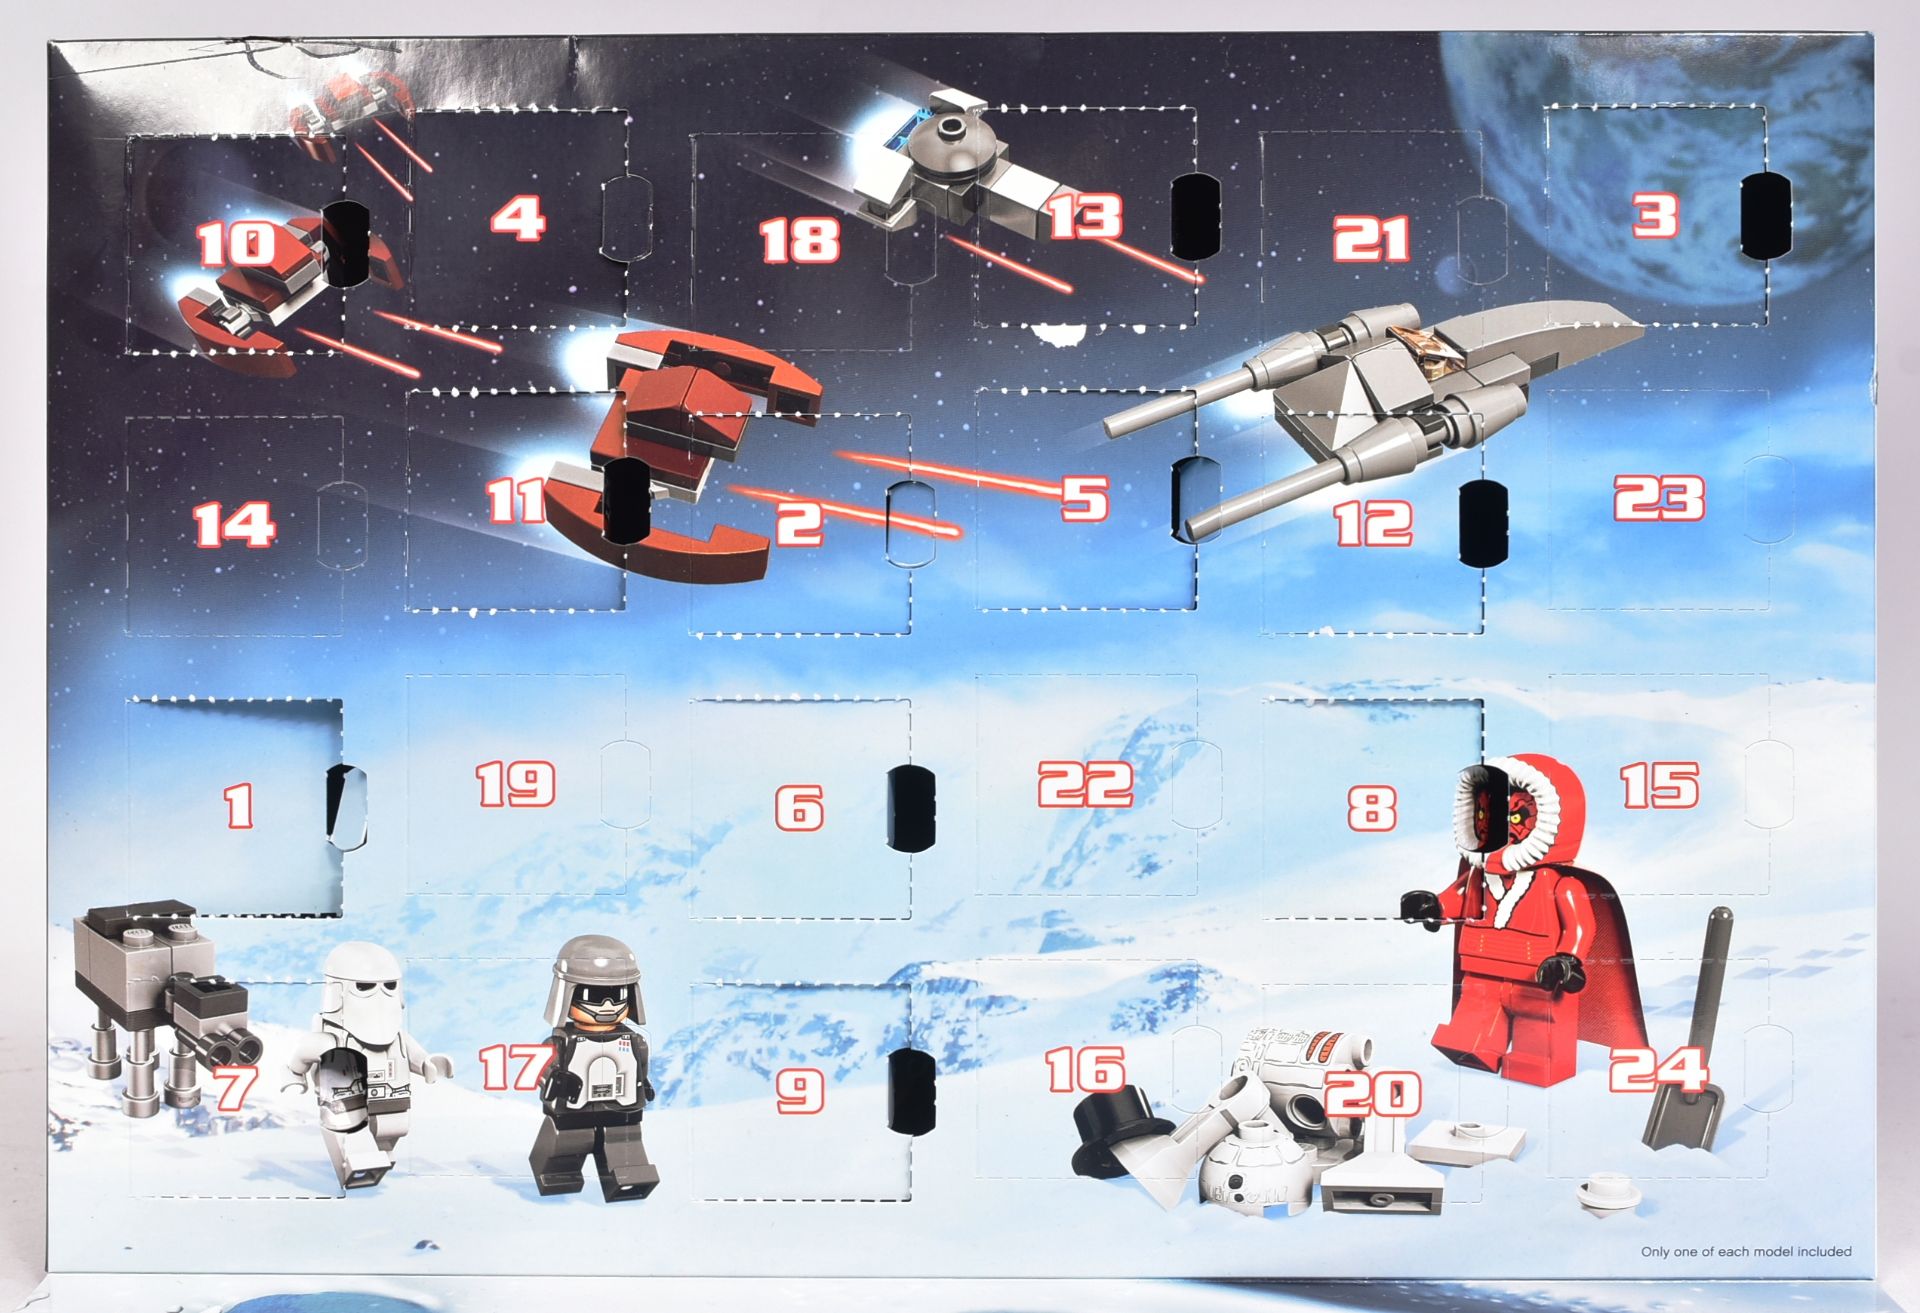 LEGO - STAR WARS - 9509 - ADVENT CALENDAR 2012 - Image 2 of 3